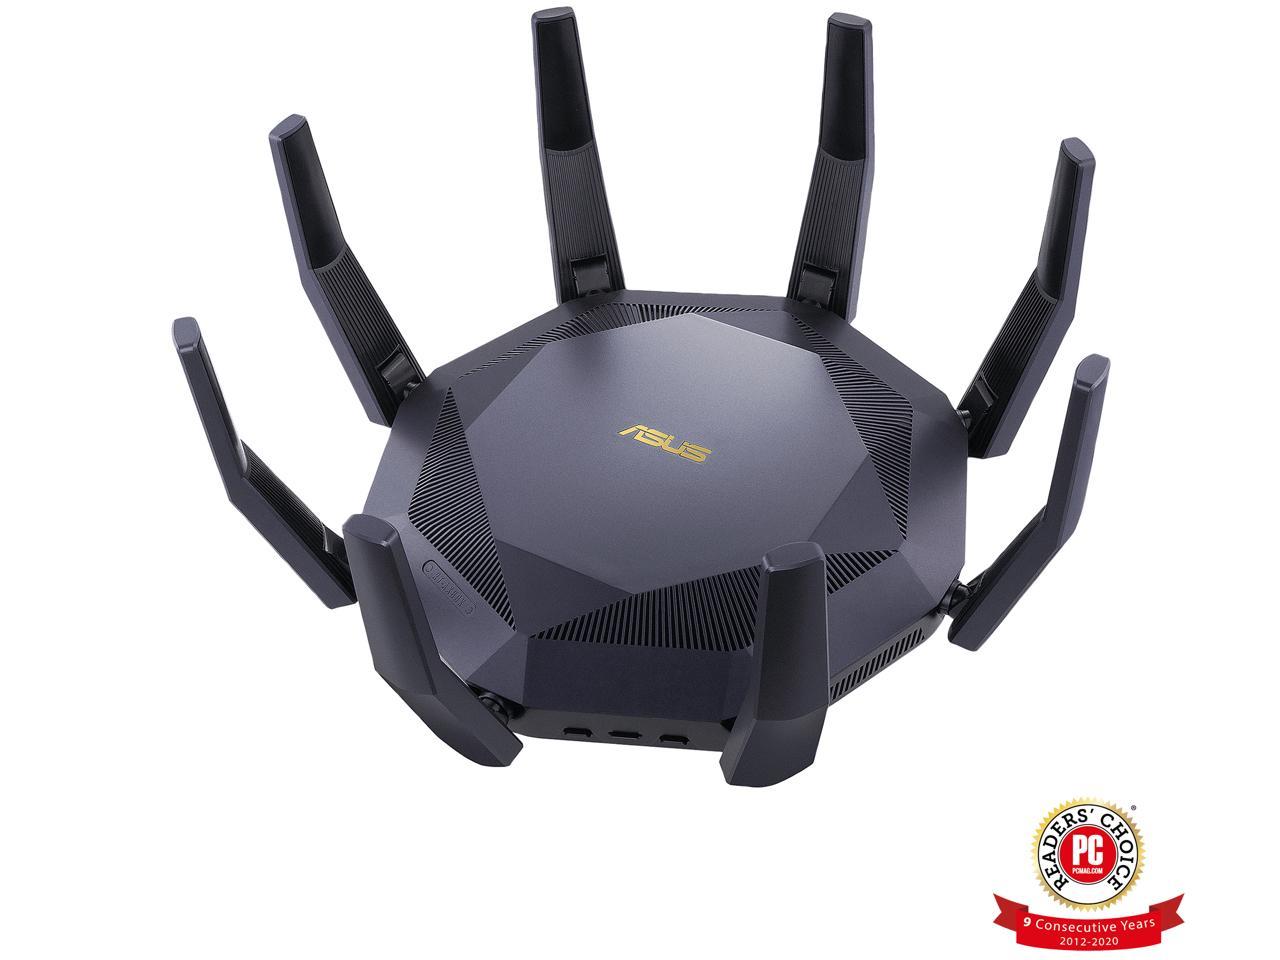 ASUS RT-AX89X AX6000 Wireless Dual-Band Gigabit Gaming Router @Newegg $355